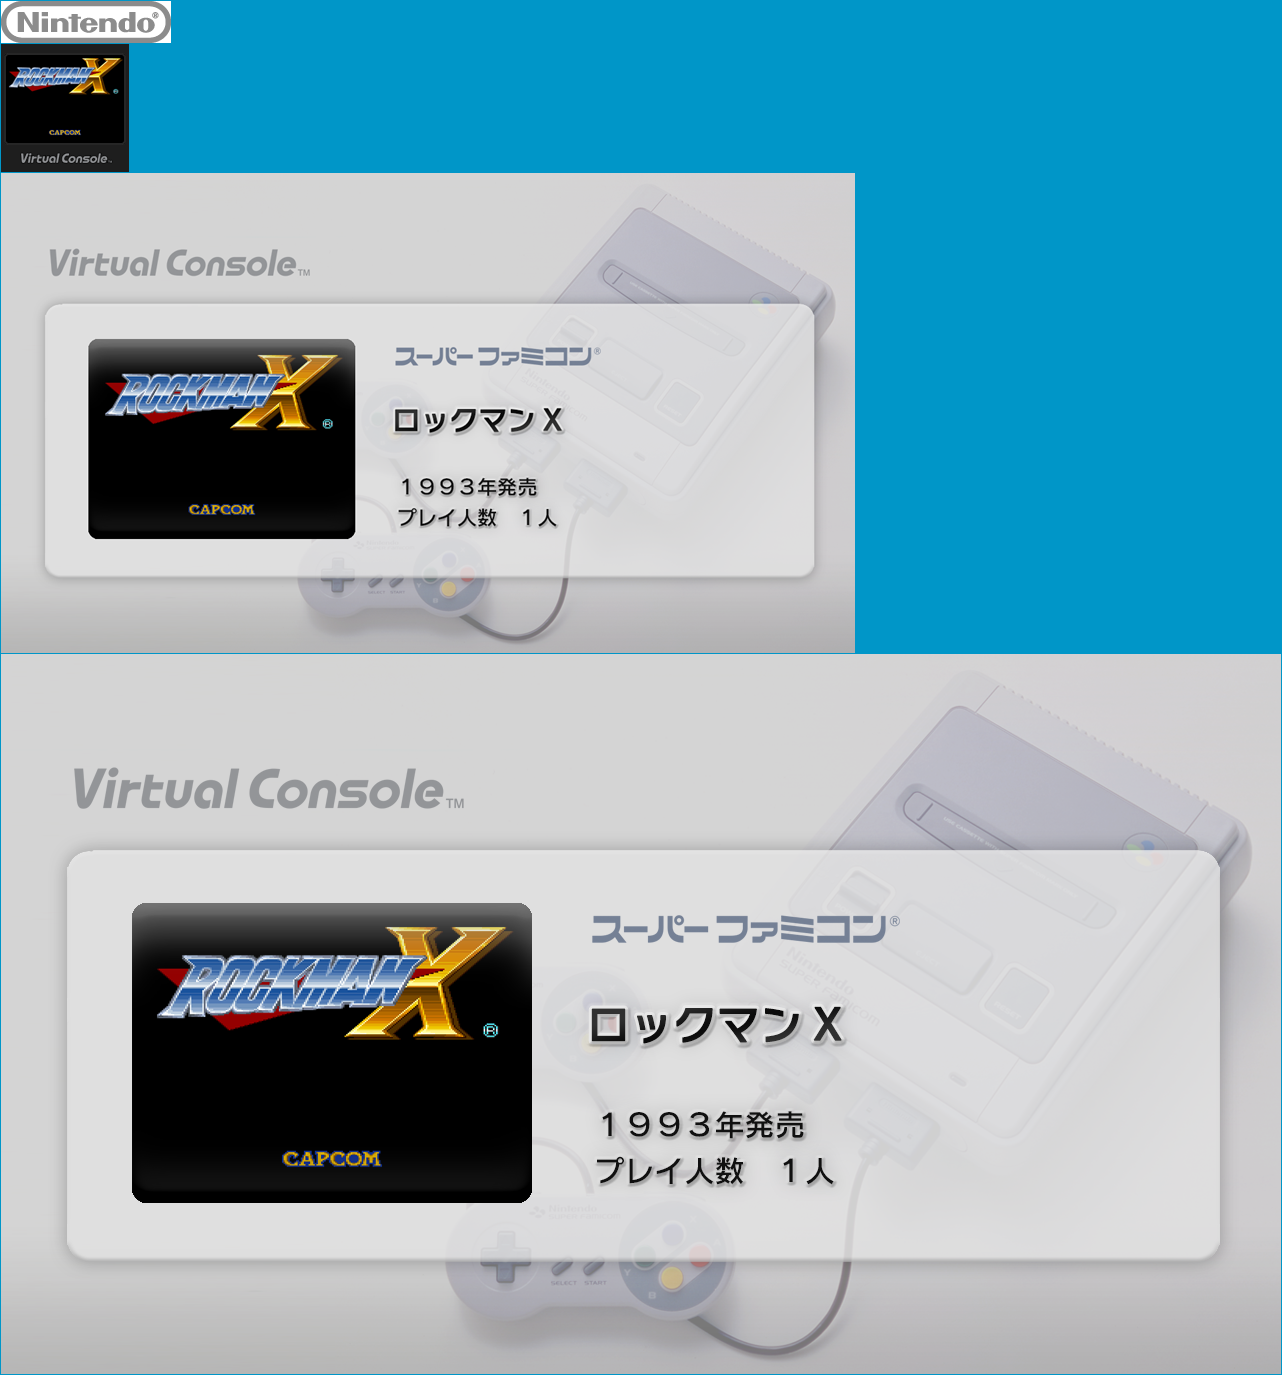 Virtual Console - Rockman X